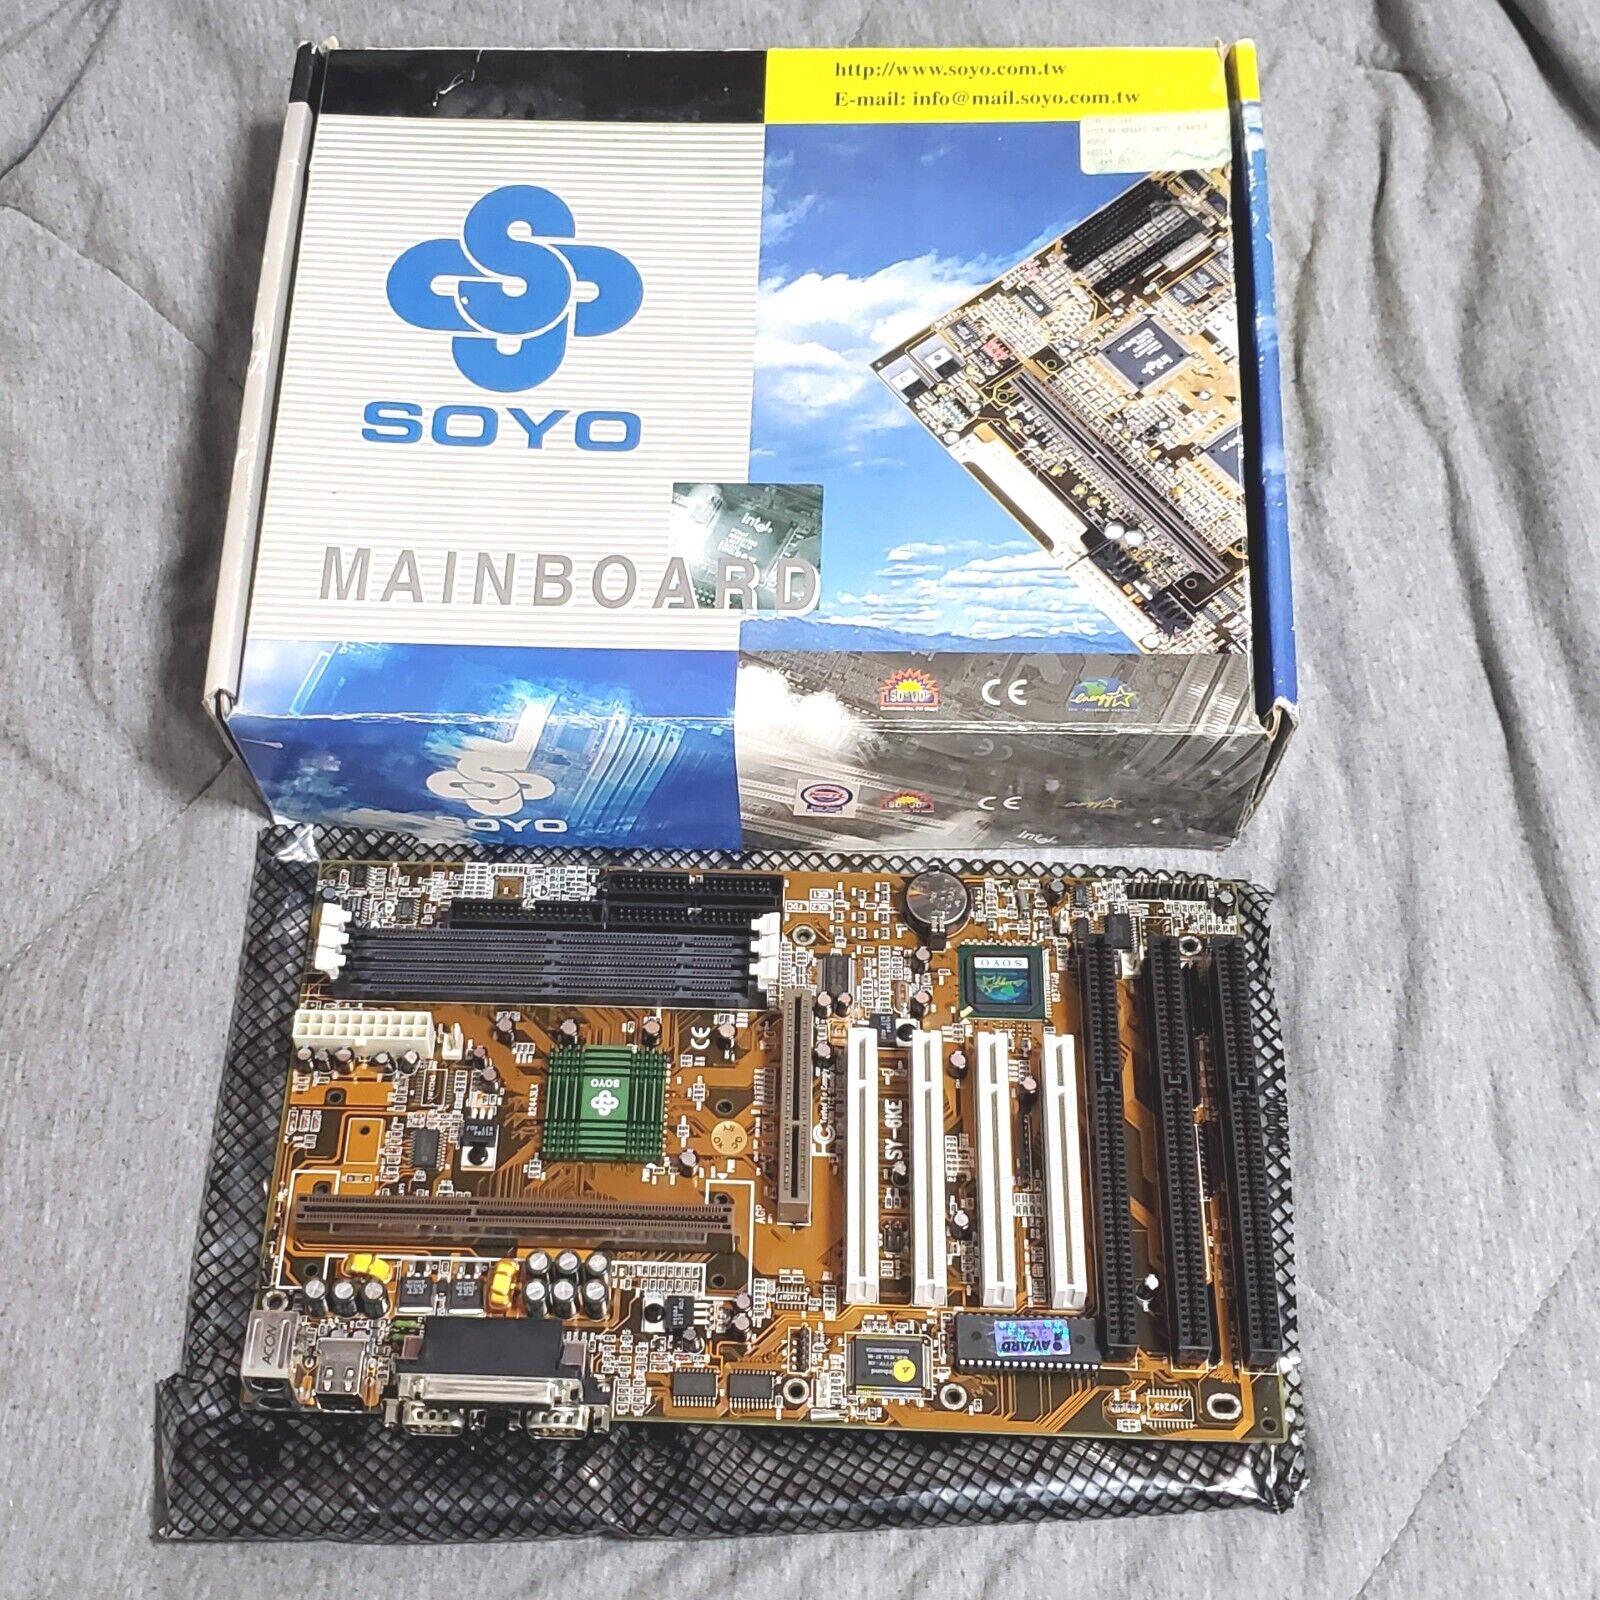 New in open box - SOYO vintage motherboard SY-6KE - Pentium 3 - 440LX AGP